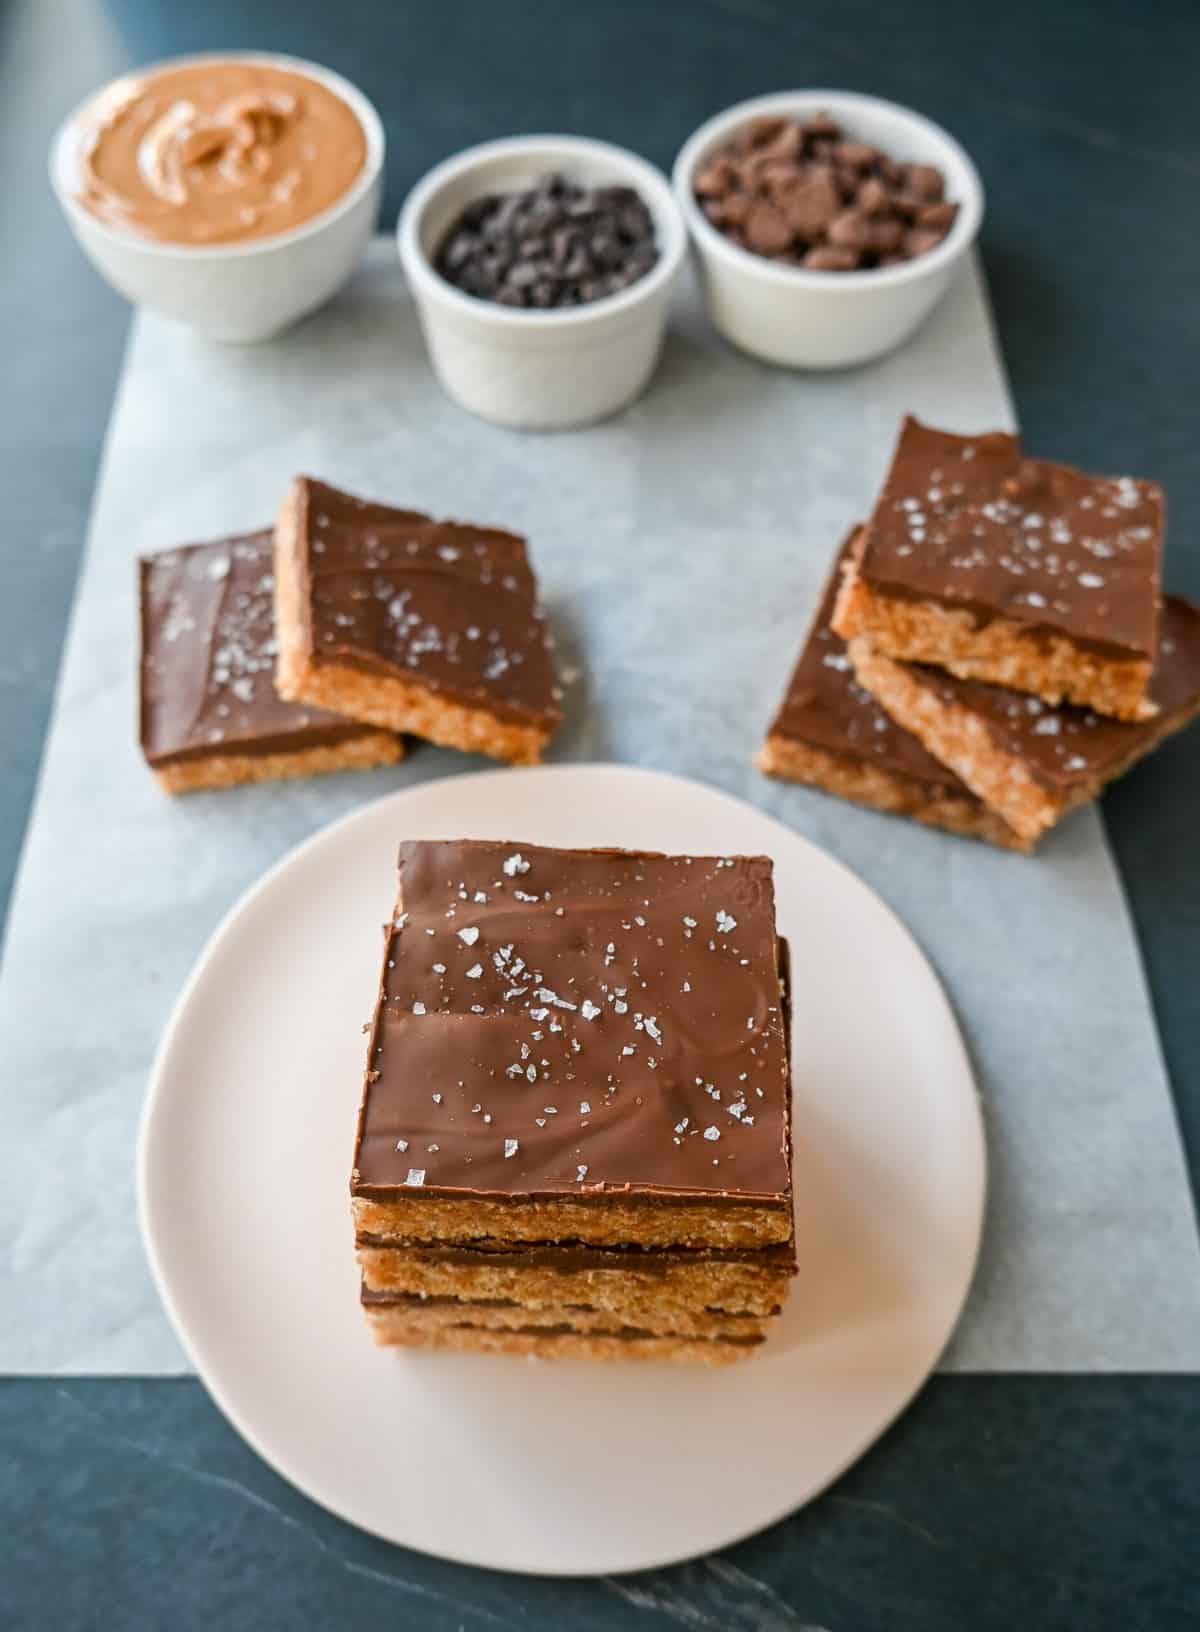 Best Scotcheroos Recipe. A popular dessert bar made with chocolate, peanut butter, butterscotch, and Rice Krispies. An easy no-bake dessert bar made in minutes! 